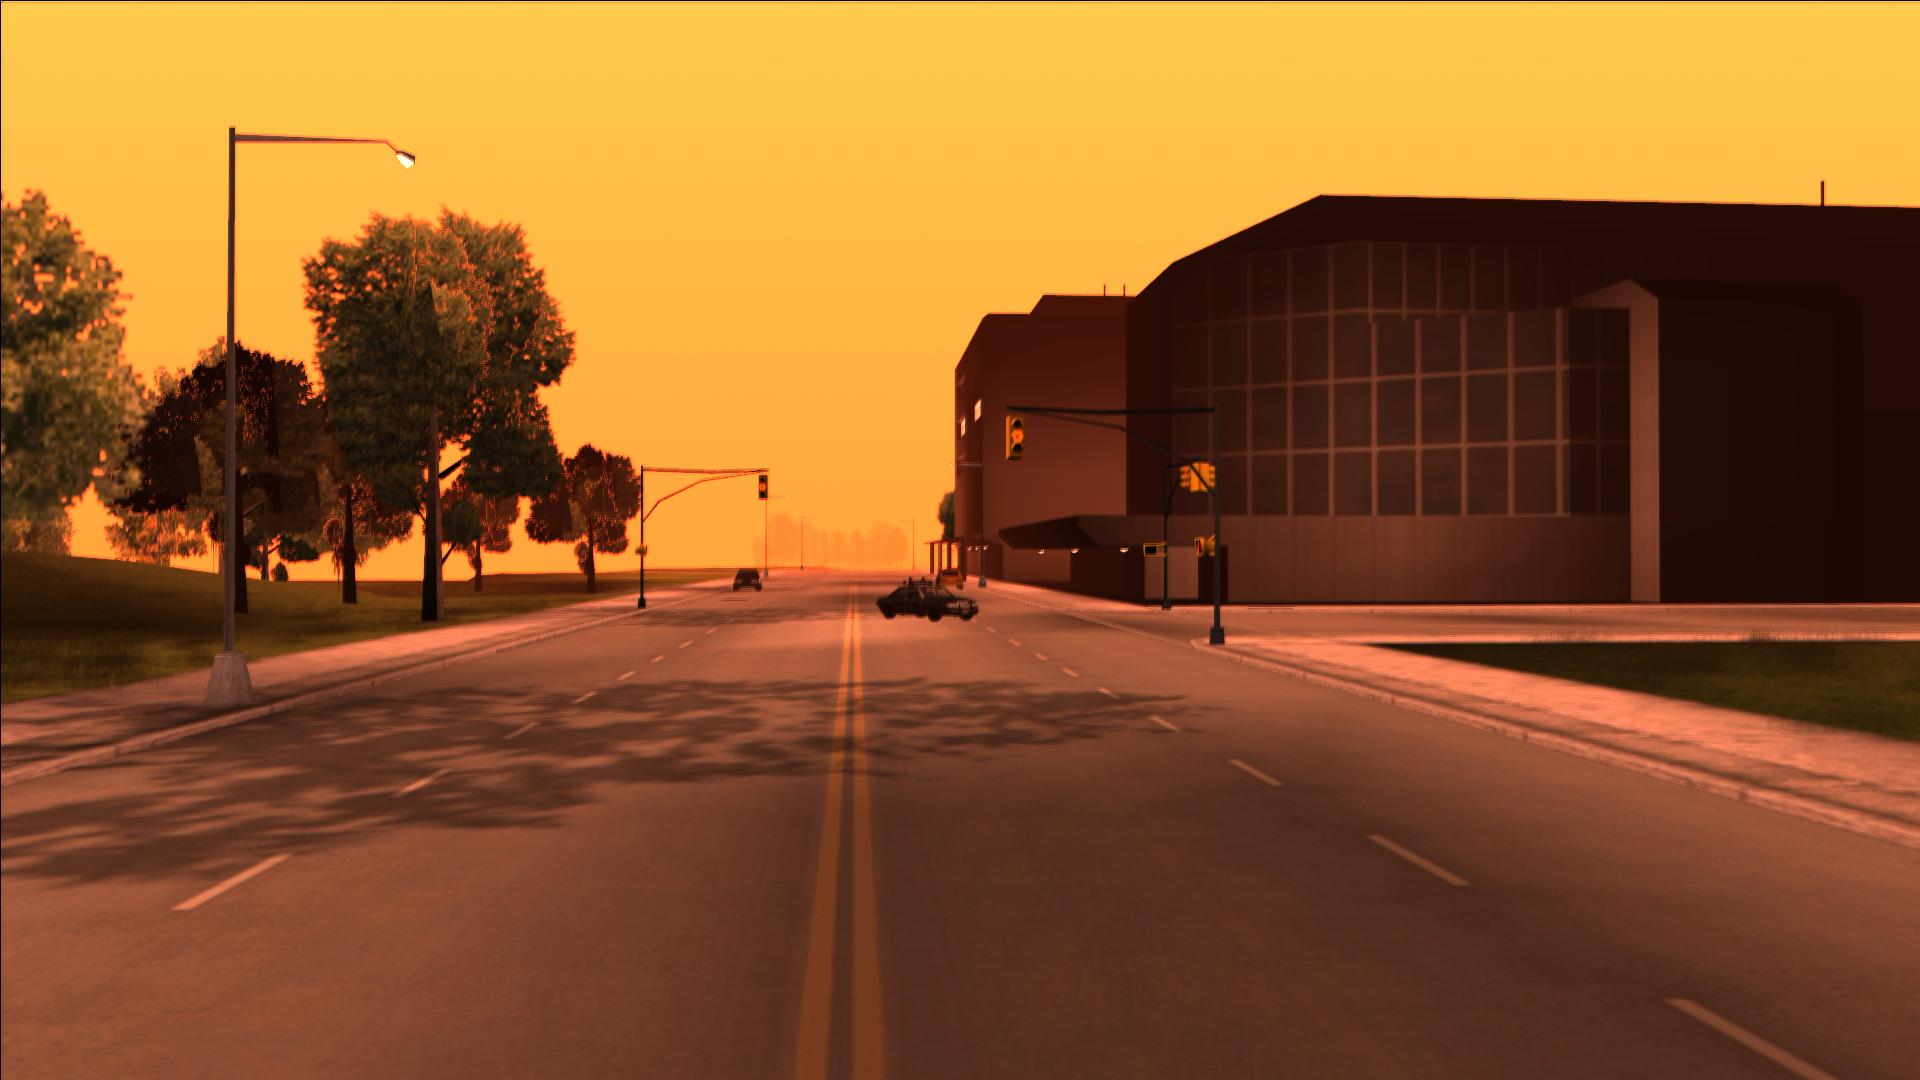 Grand Theft Auto San Andreas Windows Xbox Ps2 Game Mod Db